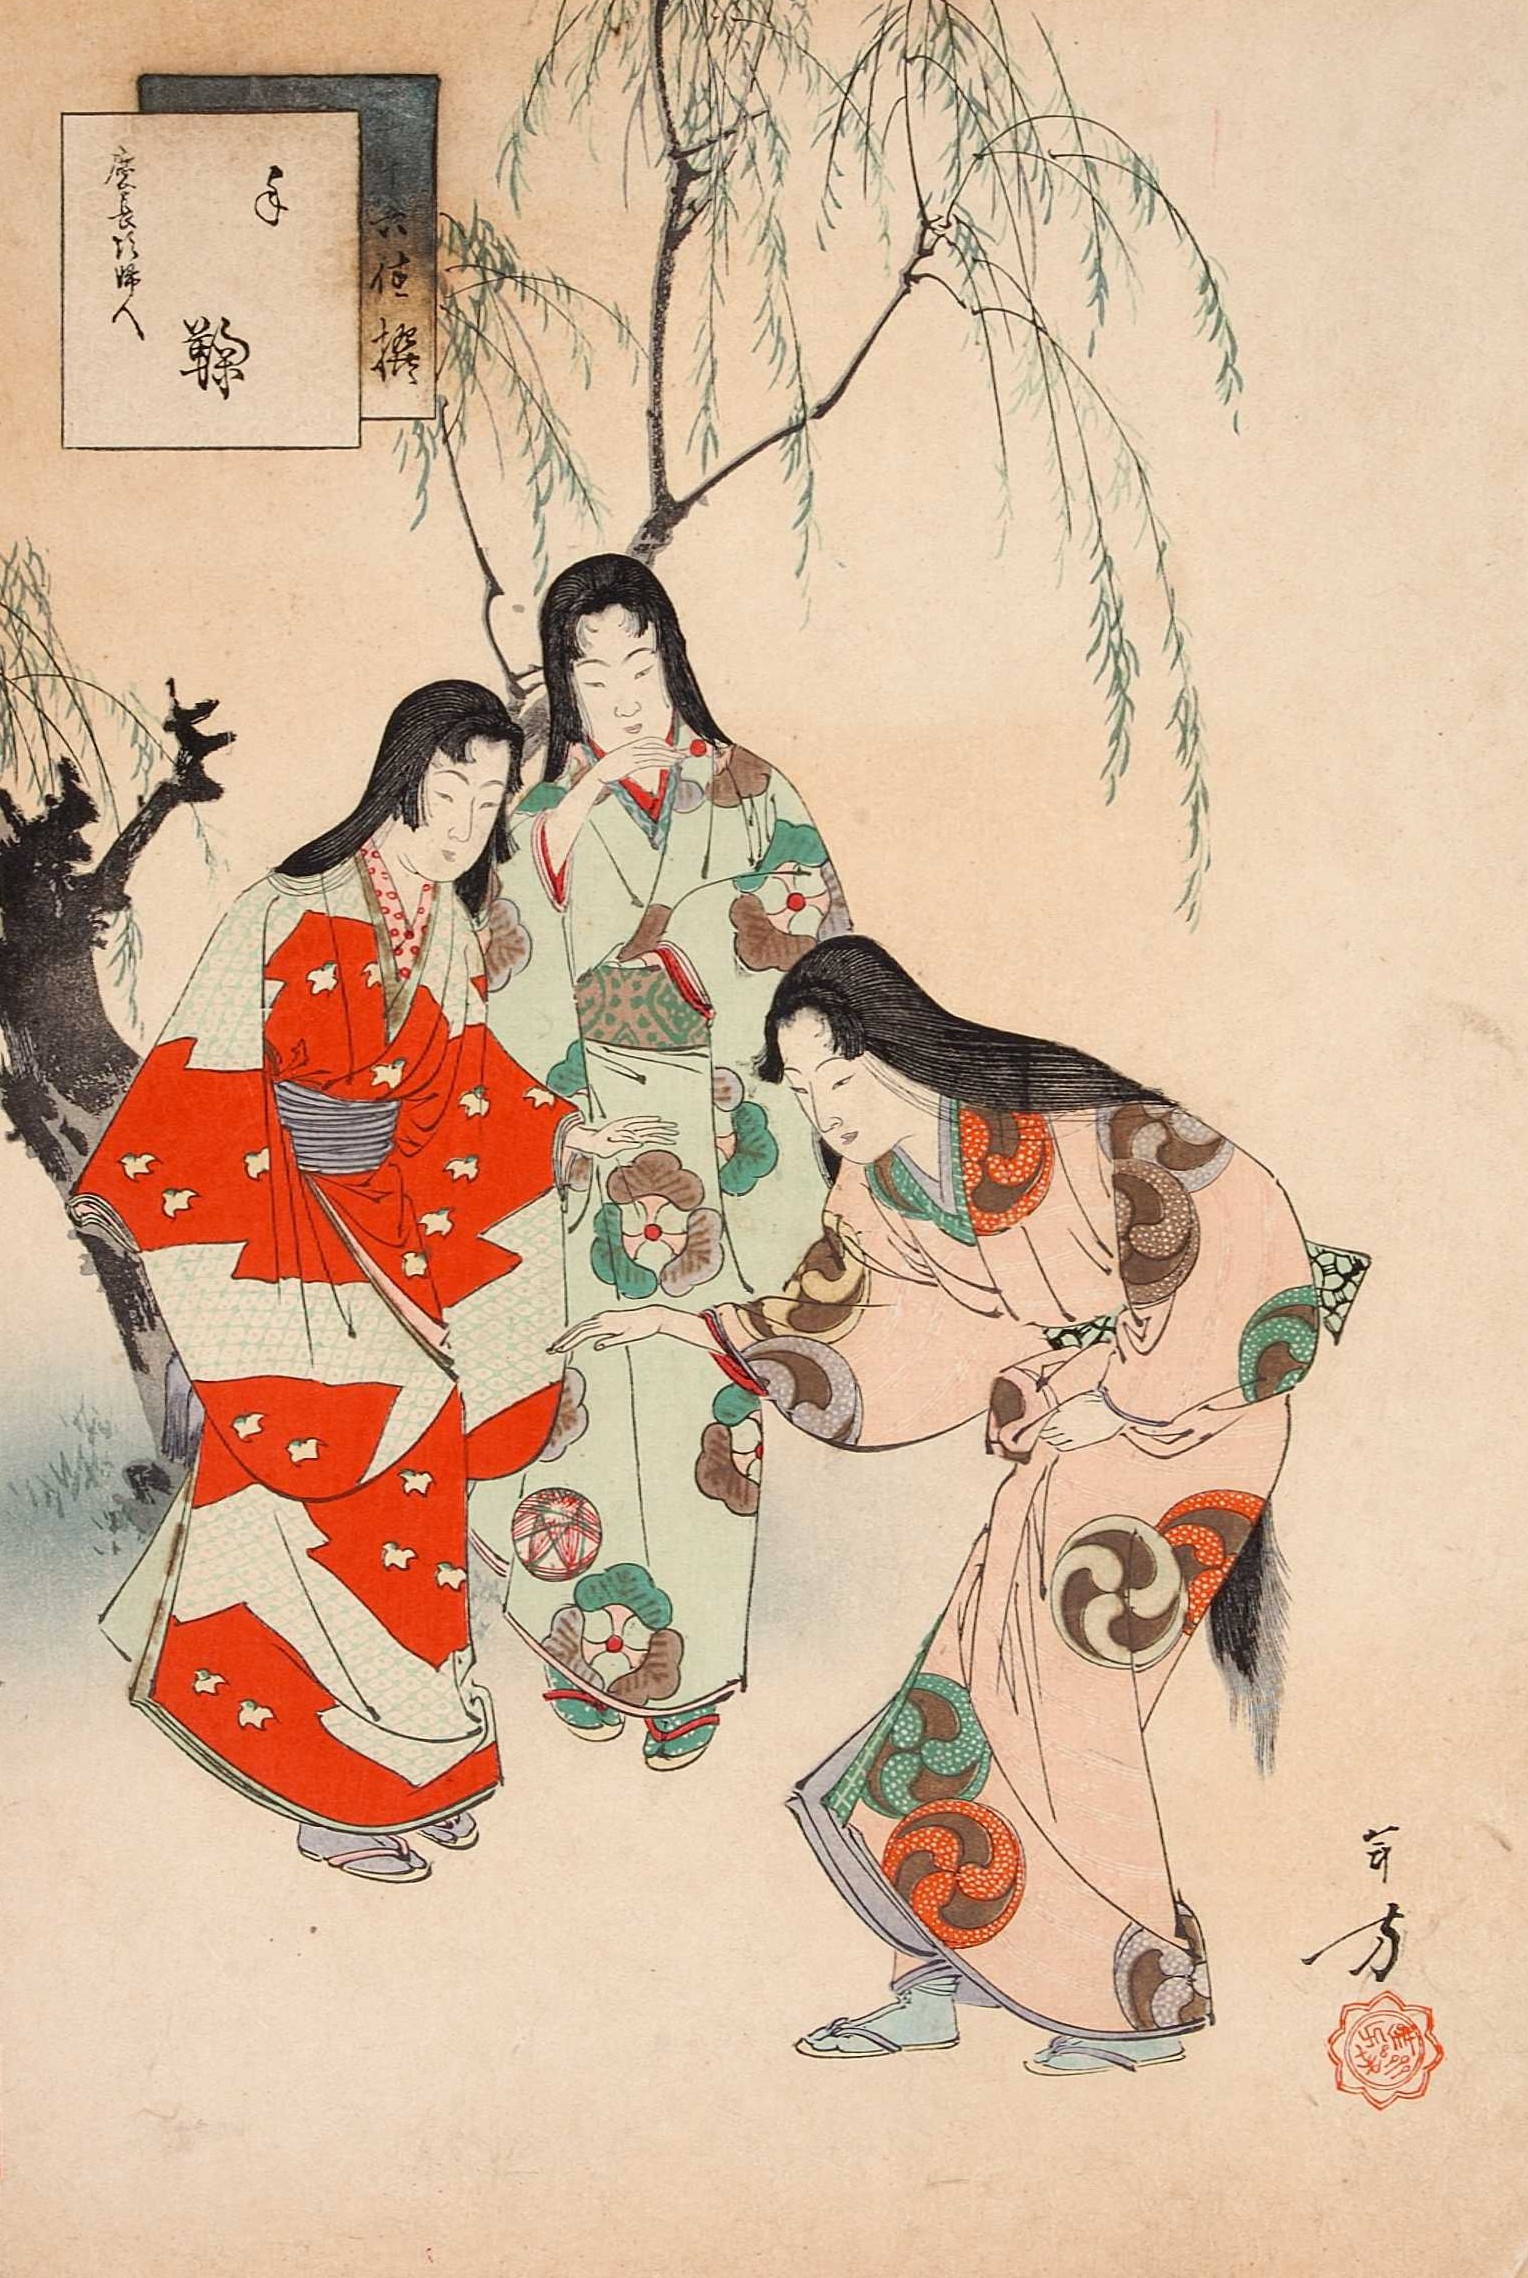 Frauen im Kimono spielen mit einem temari-Ball. (Bild: Toshikata Mizuno, Wikimedia Commons https://commons.wikimedia.org/wiki/File:Sanj%C5%ABroku_kasen,_Temari_Keich%C5%8D_koro_fujin_by_Mizuno_Toshikata.jpg Public Domain)